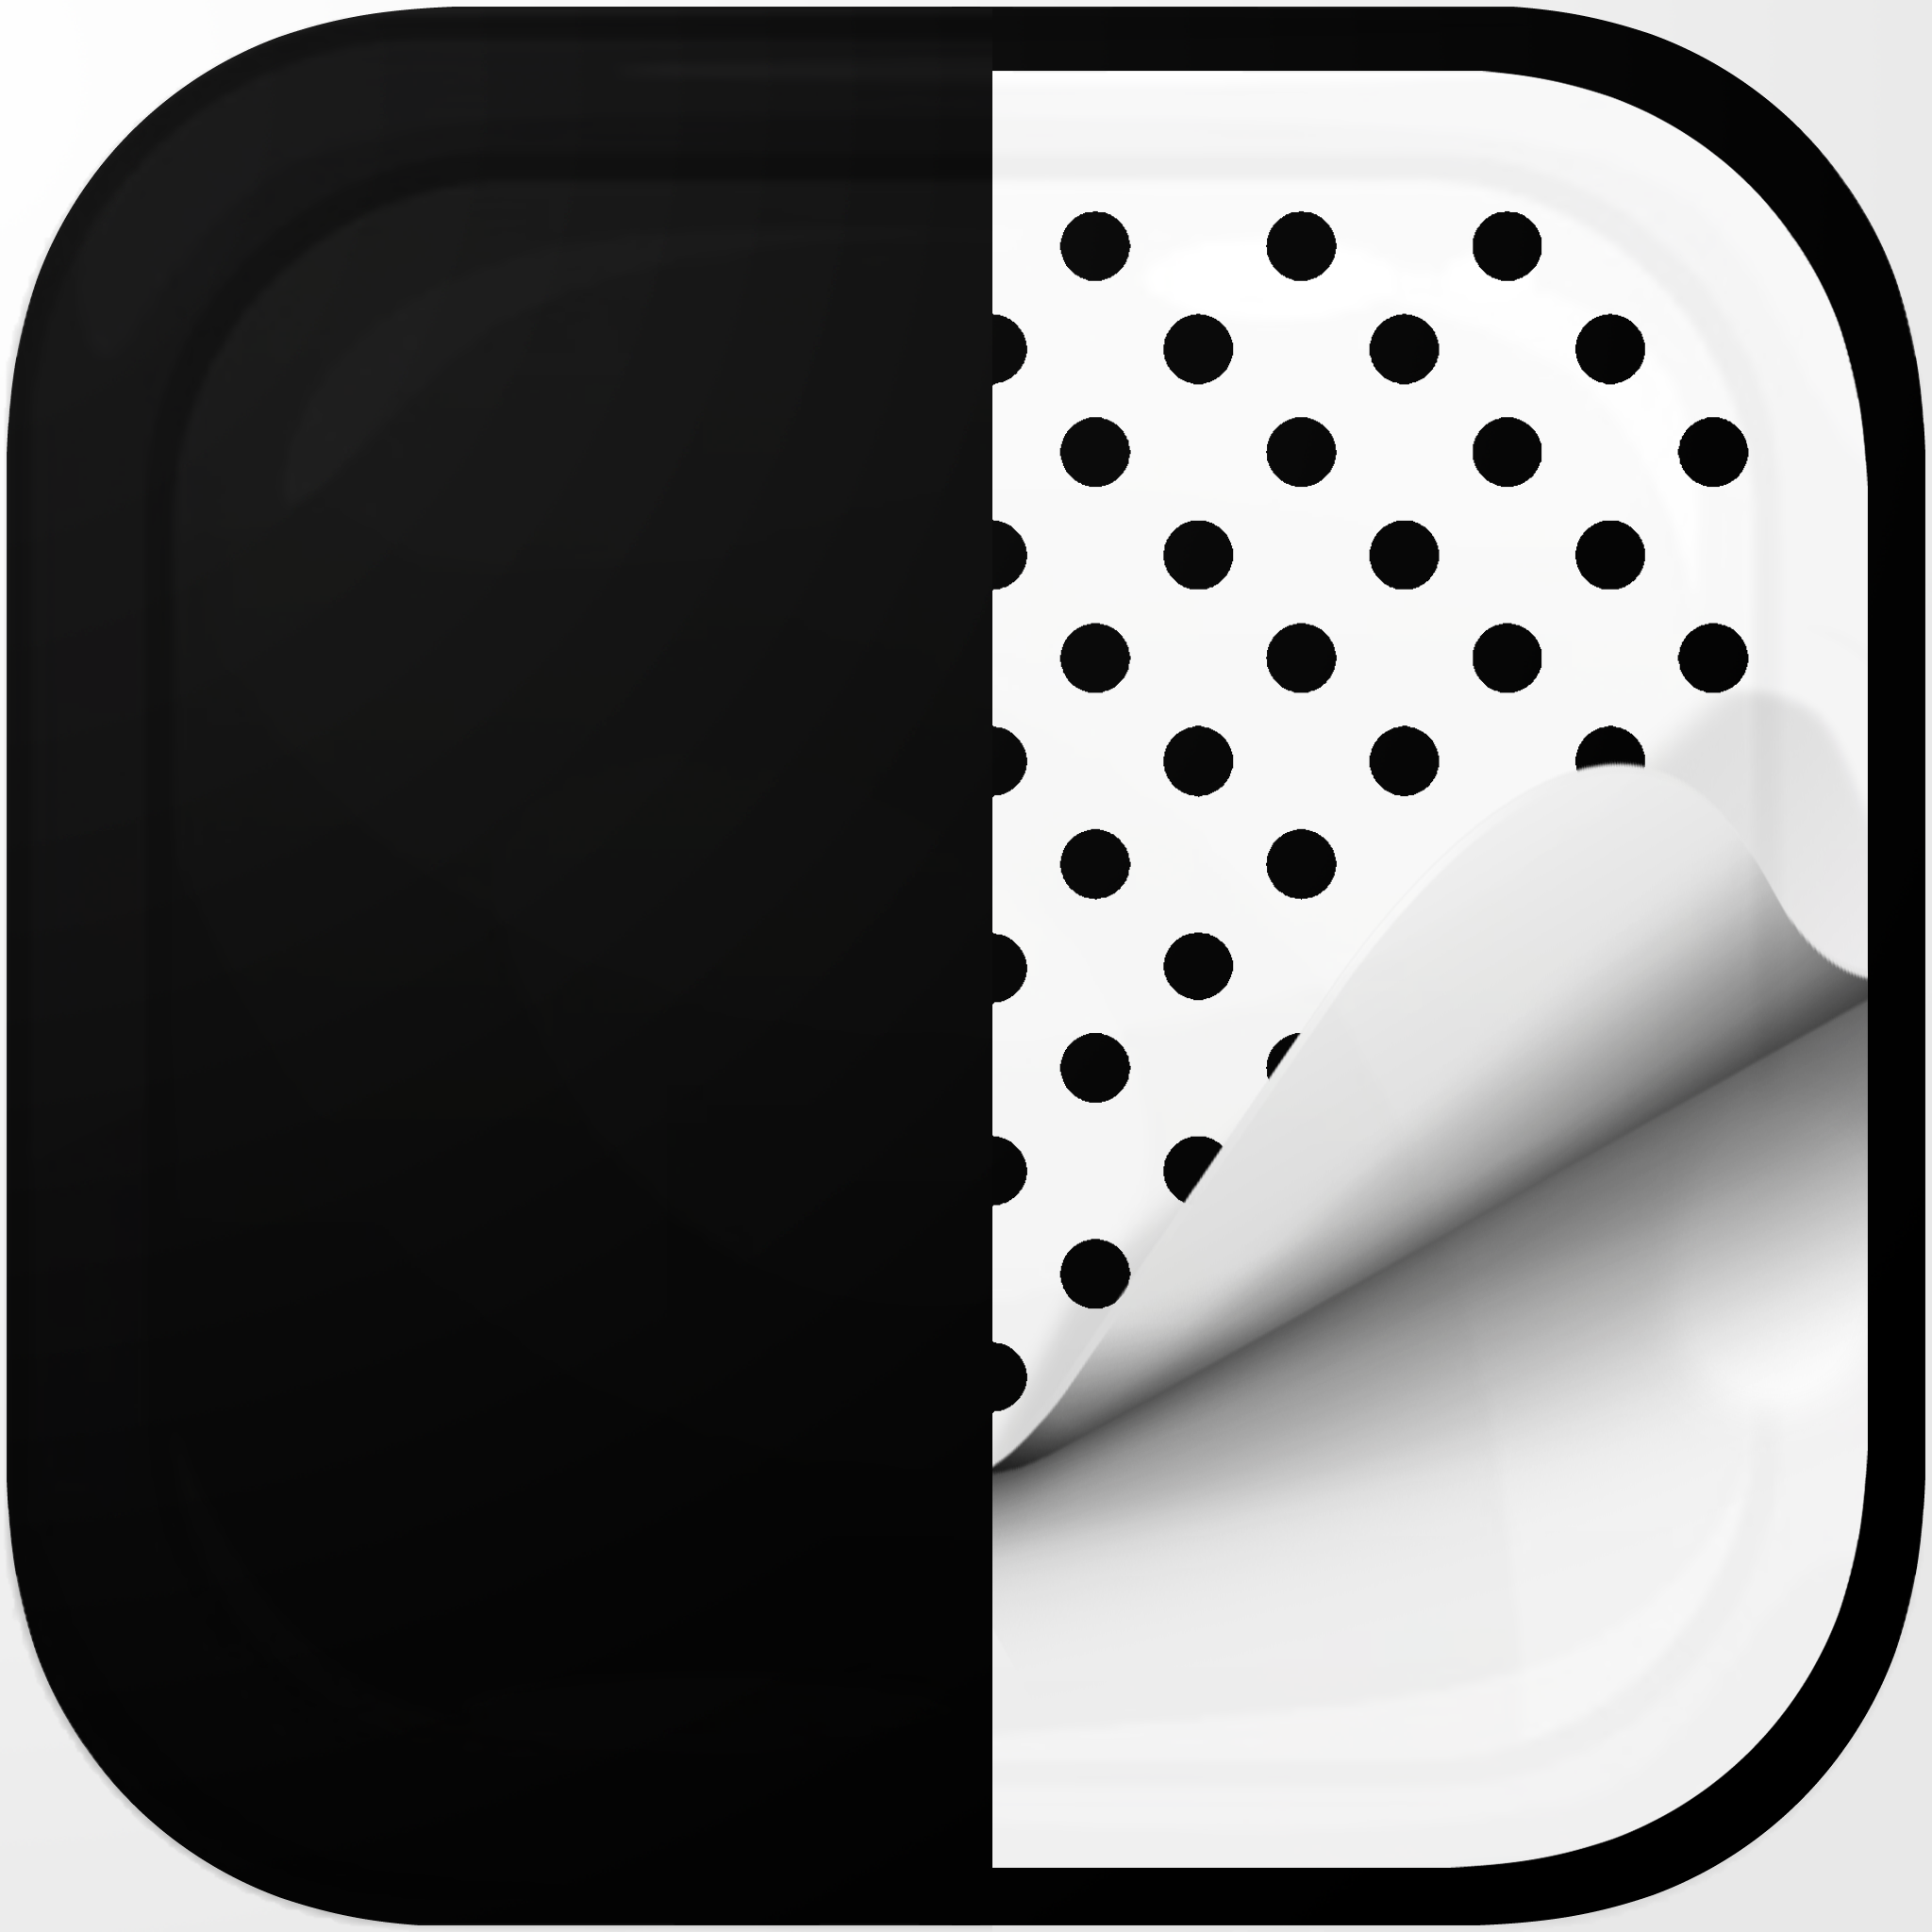 The Wallpaper App 2 icon